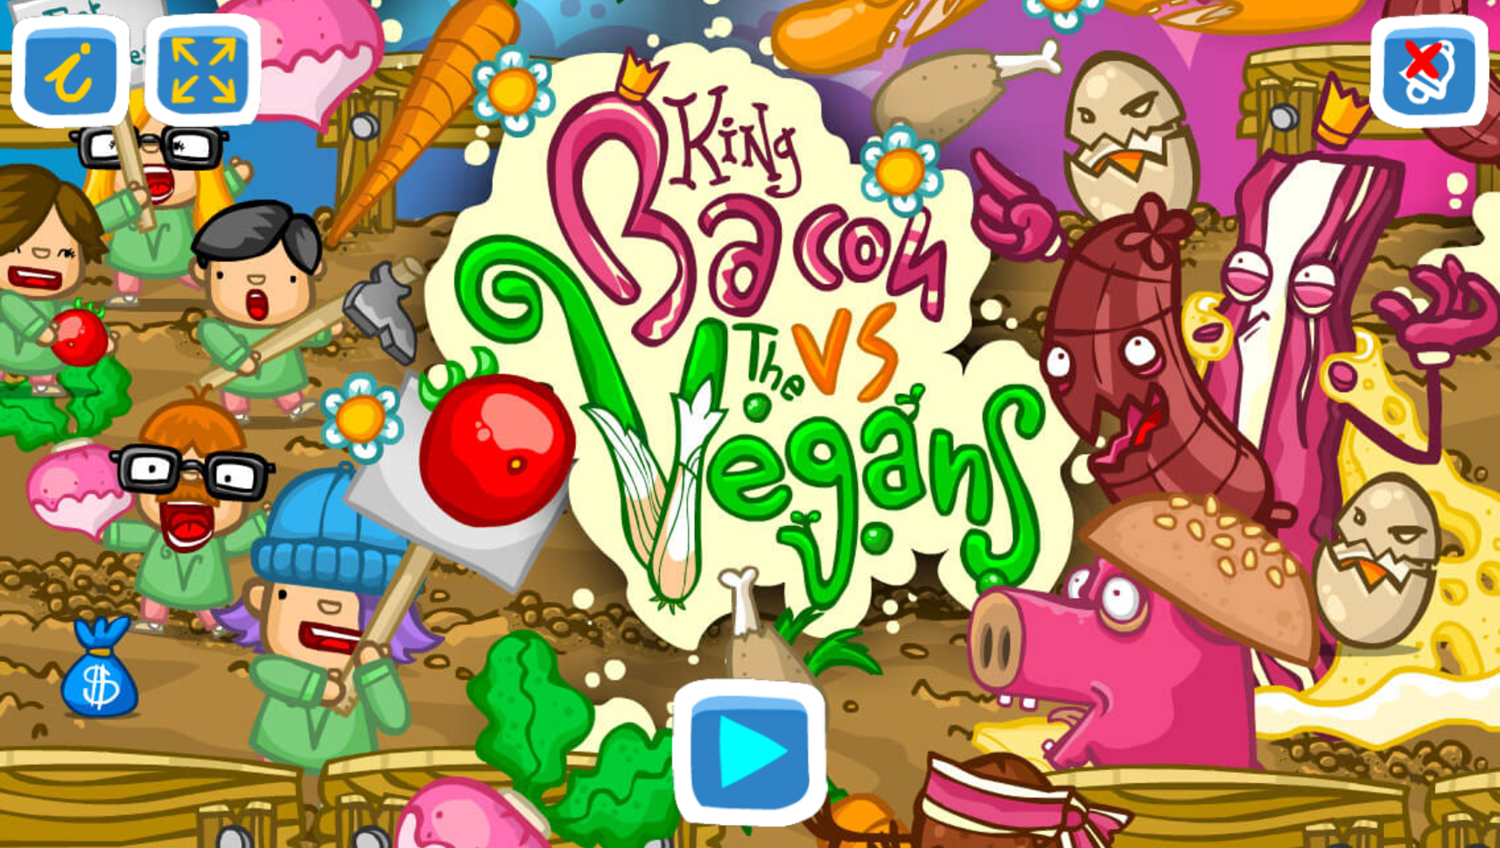 King Bacon vs Vegans Game Welcome Screen Screenshot.